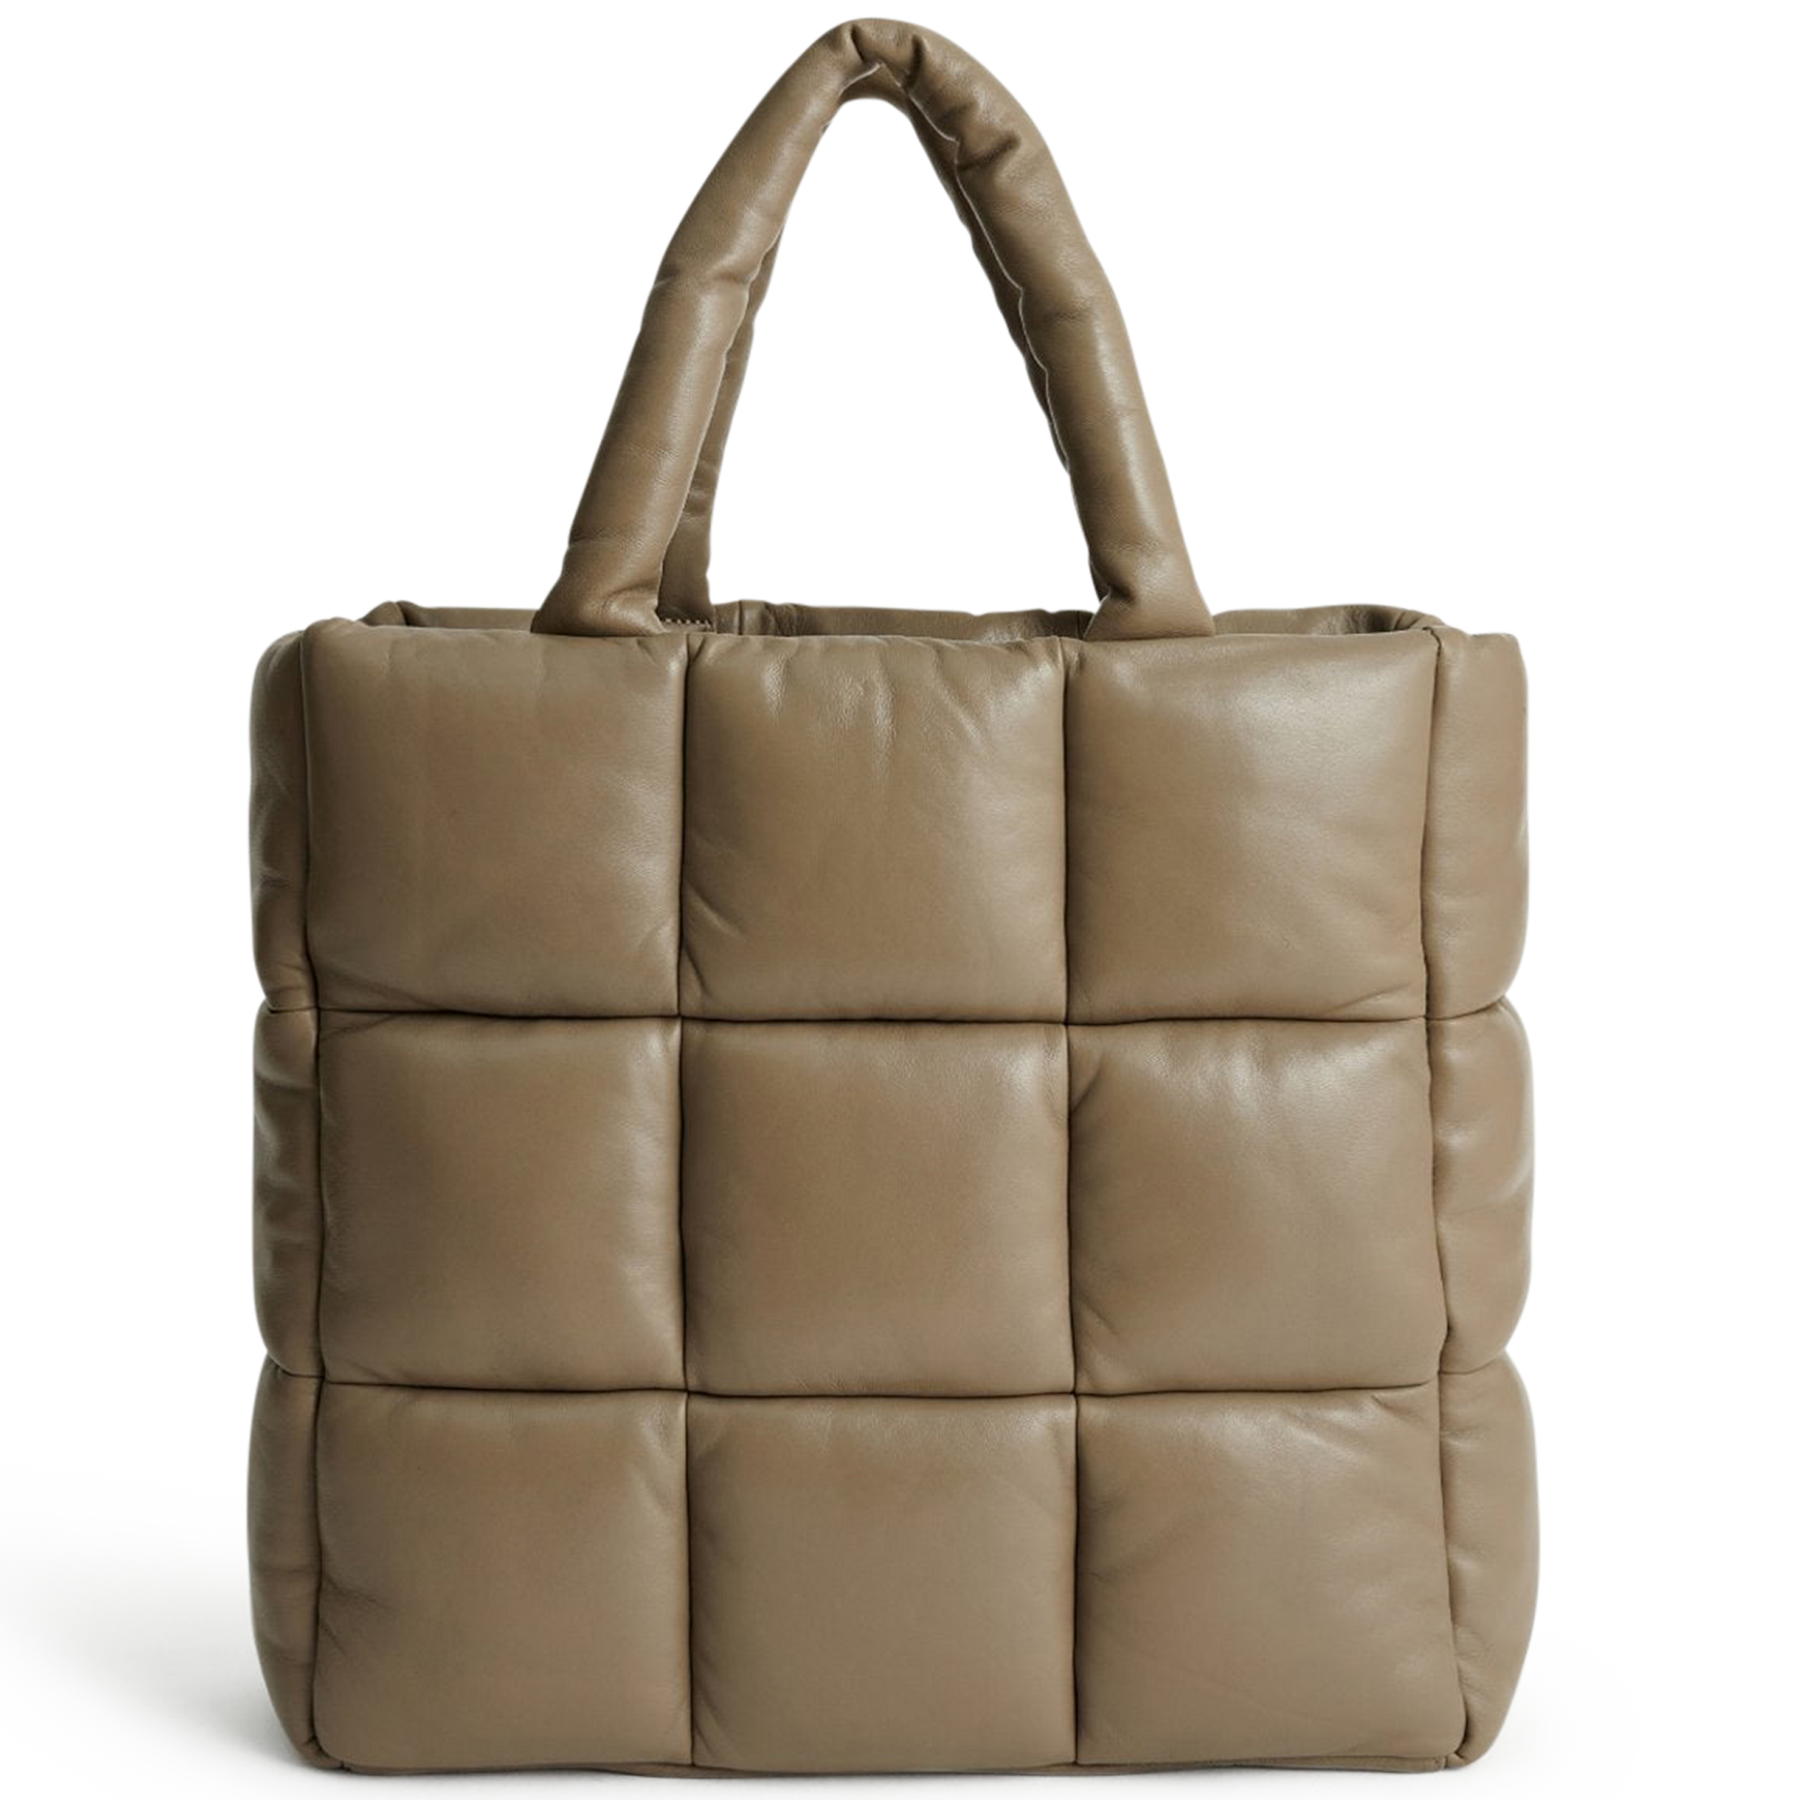 Assante Puffy Bag - Sandstone Beige